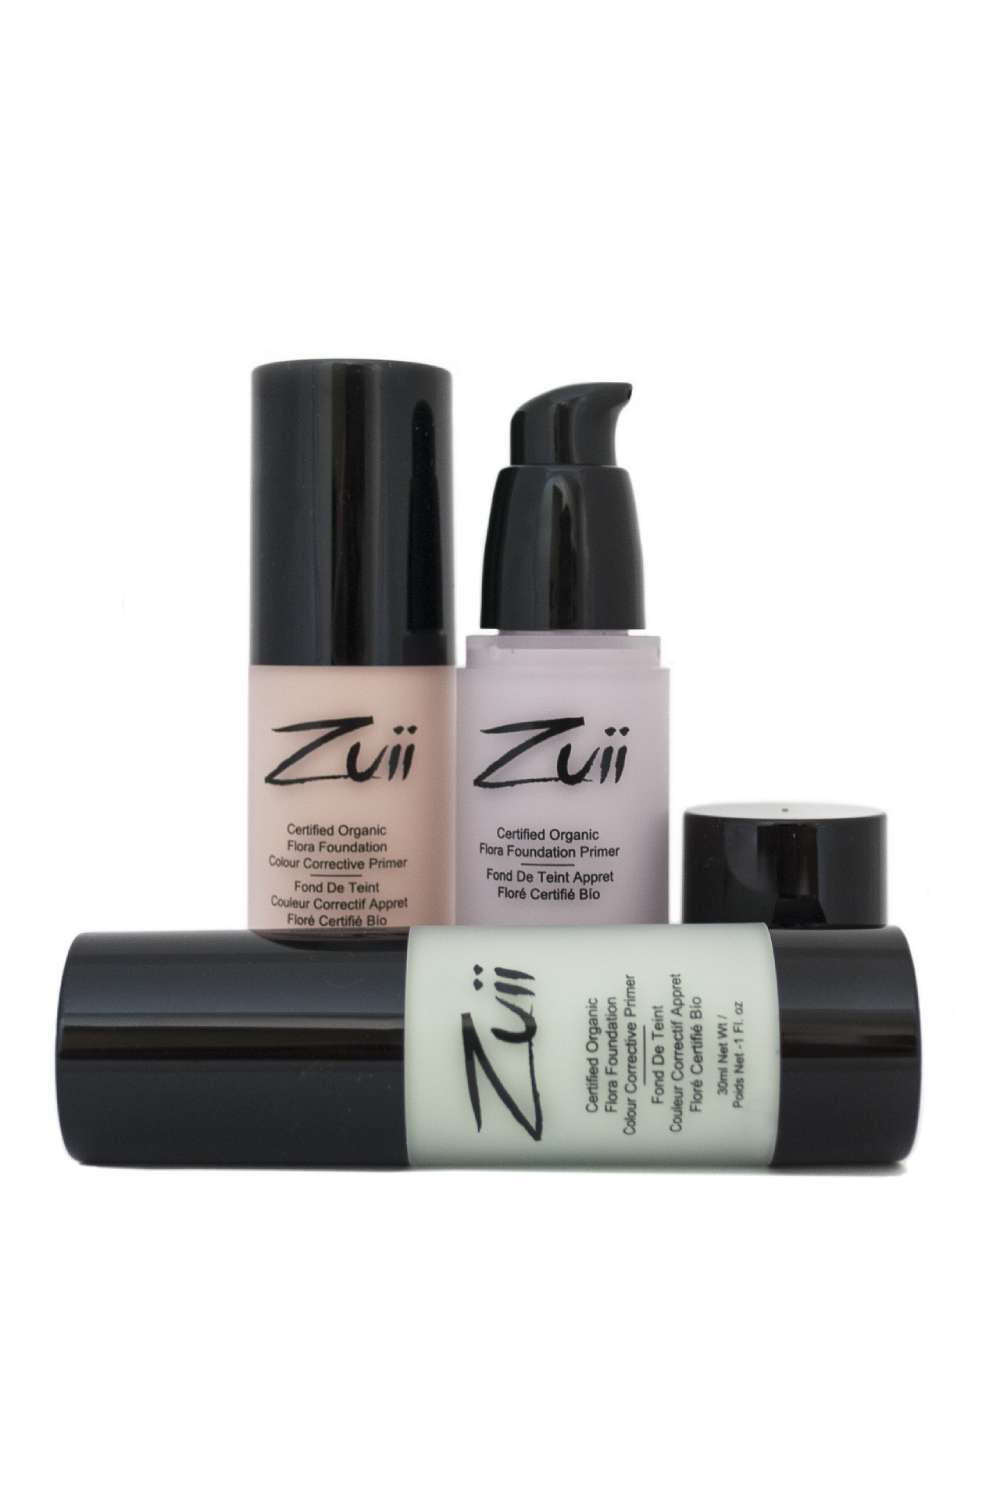 Zuii Organic Certified Primer -Colour Corrective -Mint